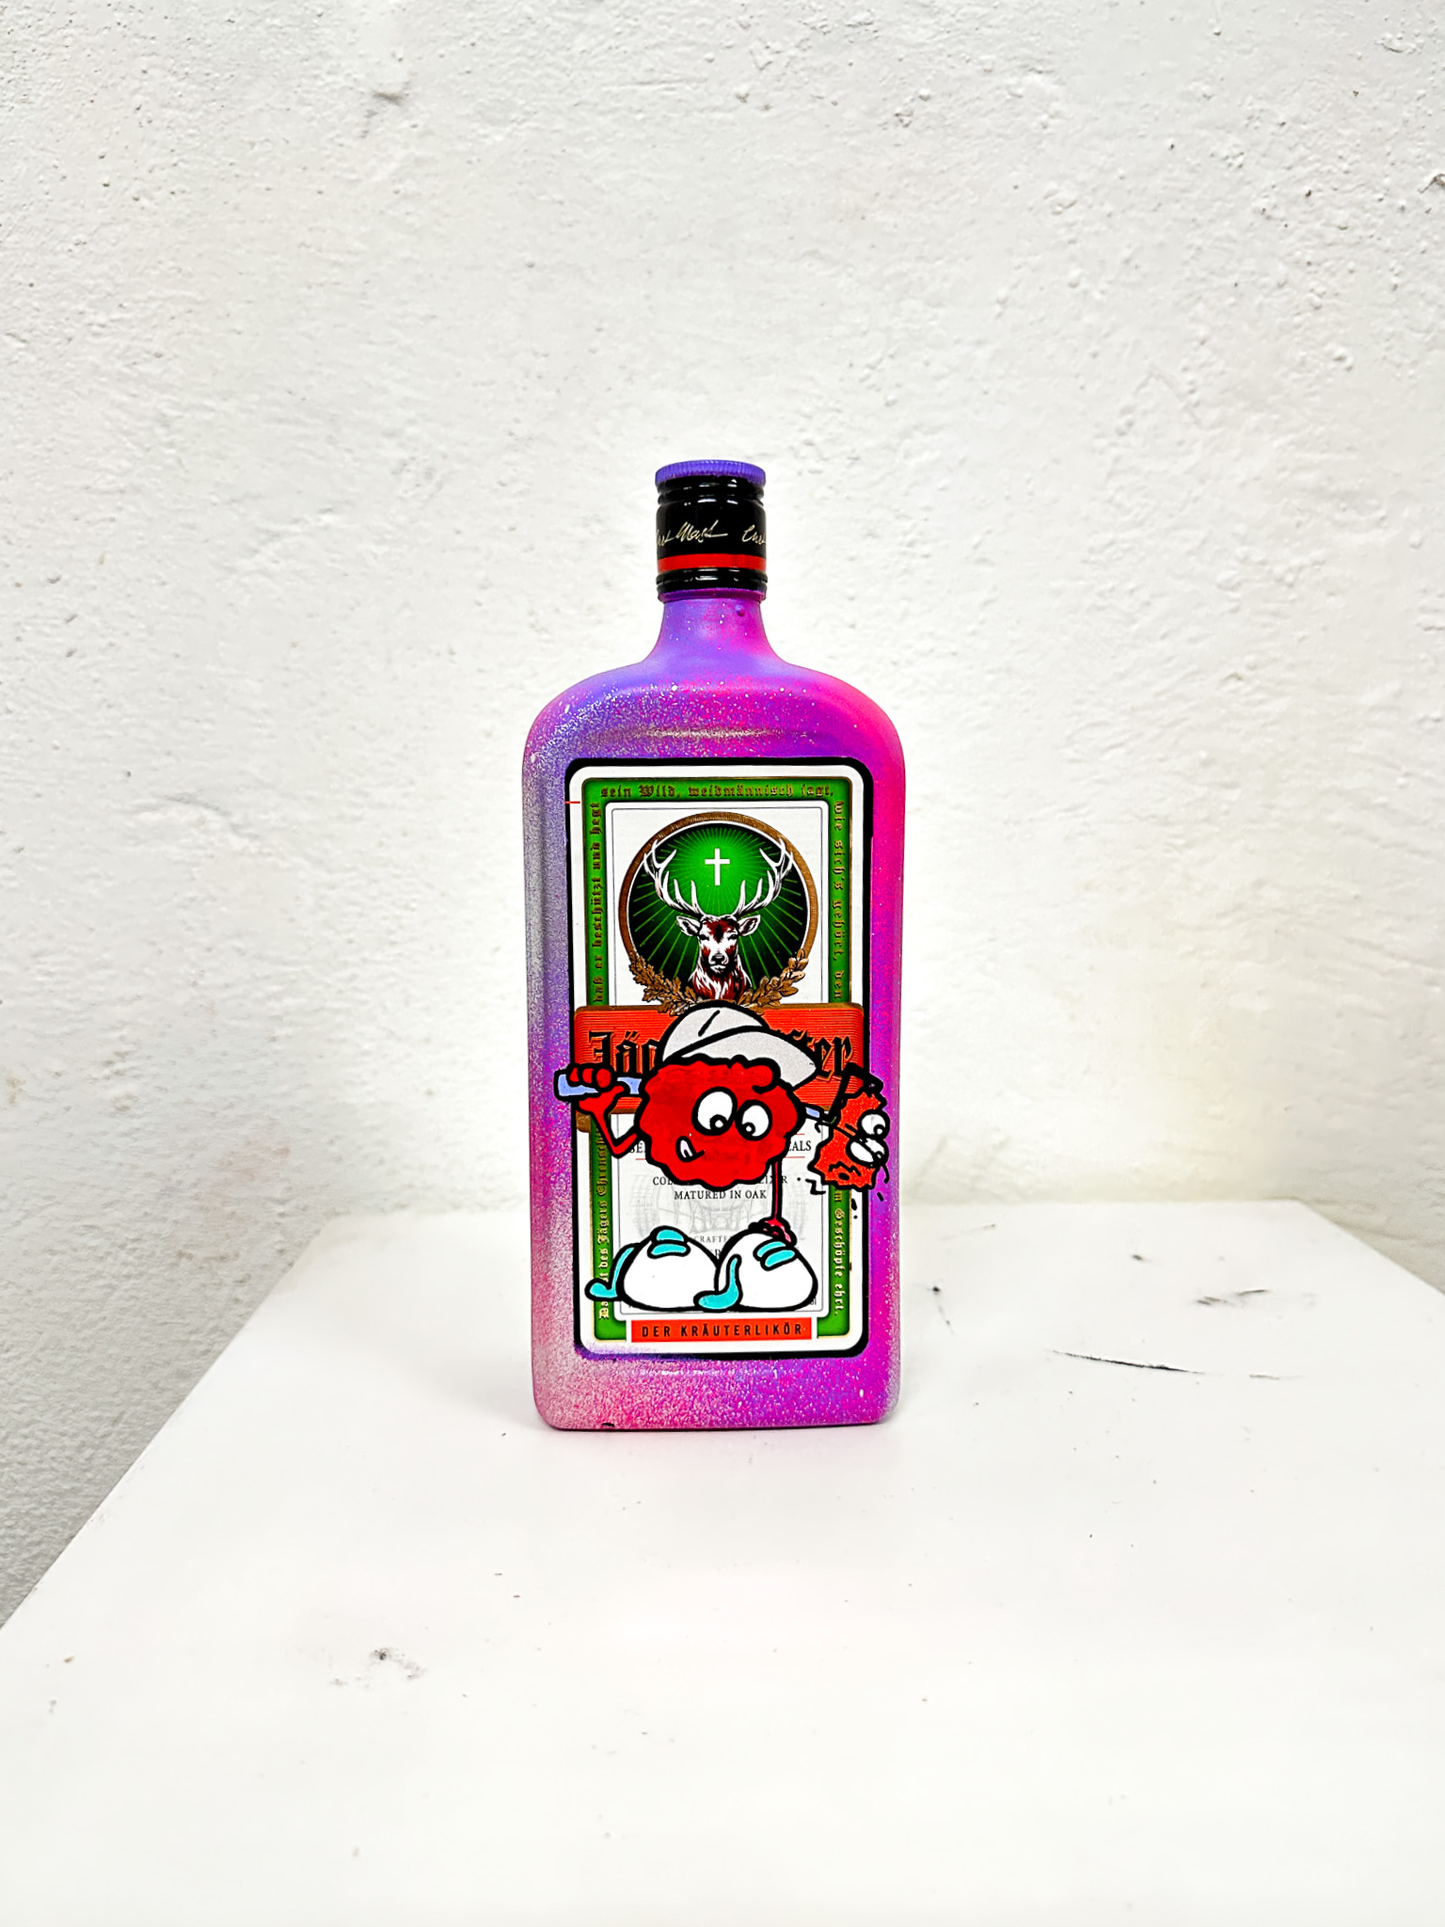 8enjamin x Jagermeister Bottle - 1L